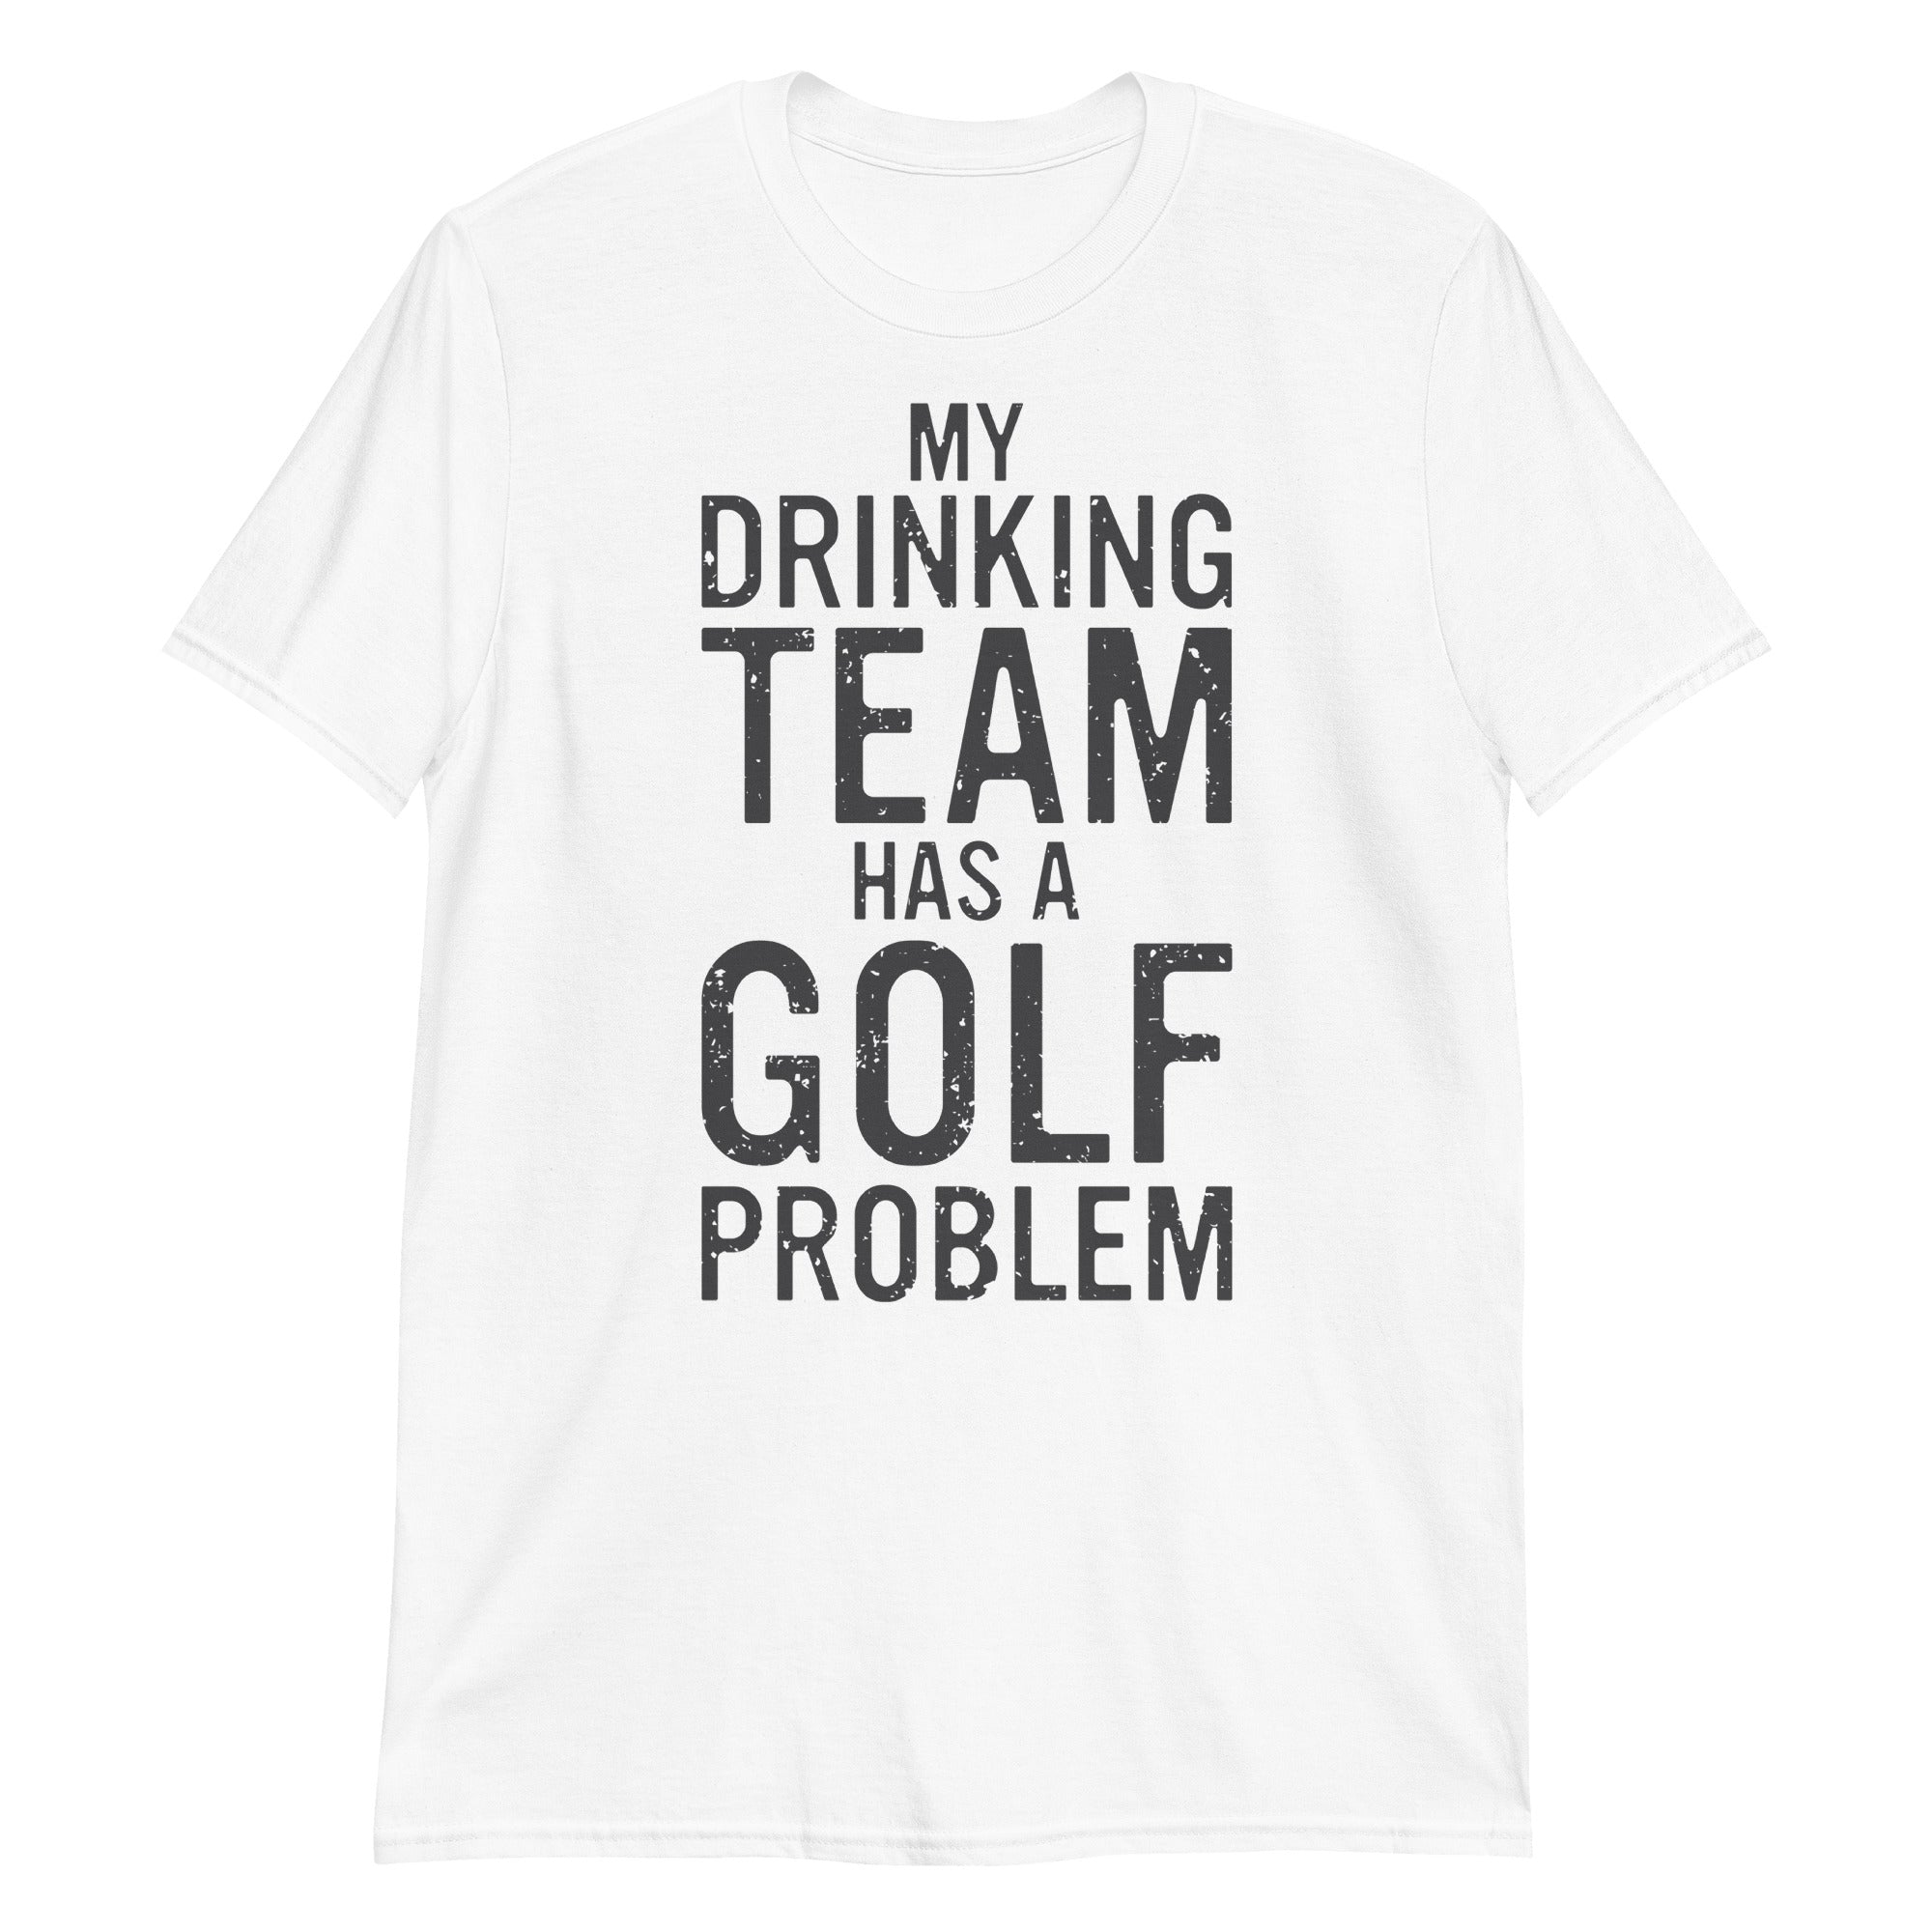 My drinking team has a golf problem